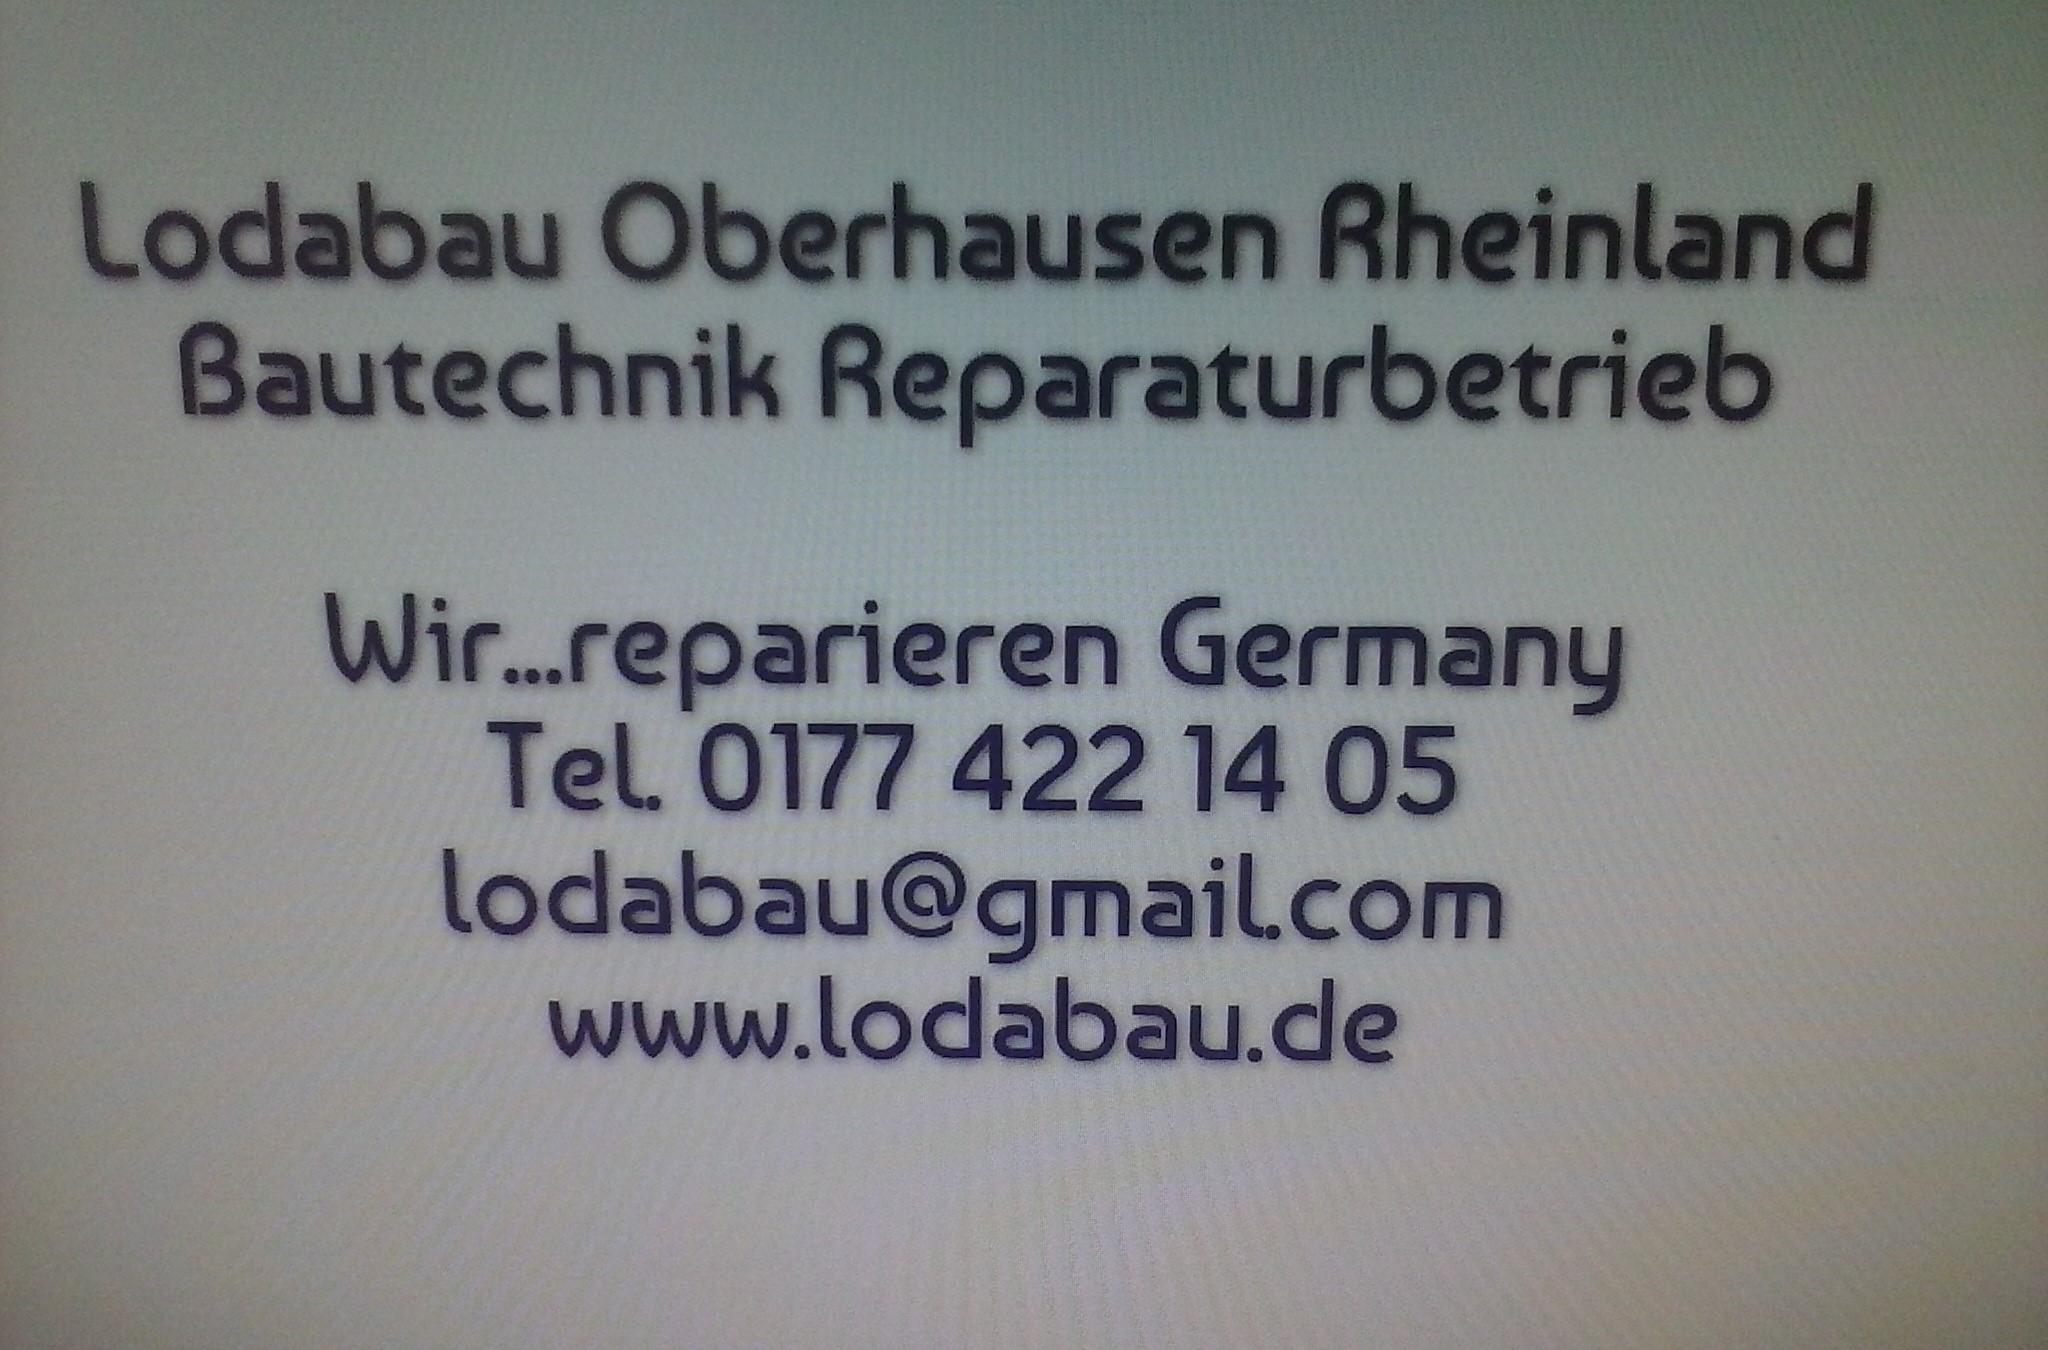 Lodabau Oberhausen Rheinland